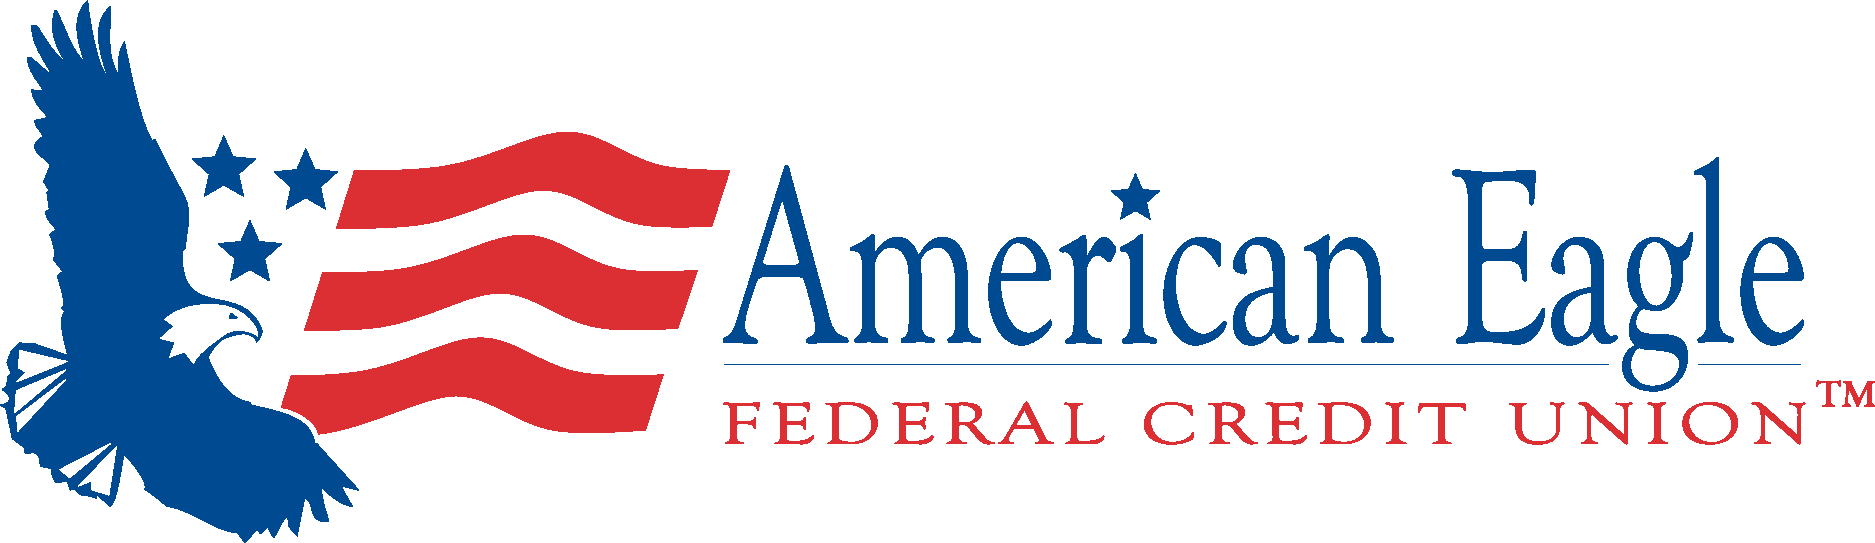 American Eagle Federal Credit Union Logo Vector